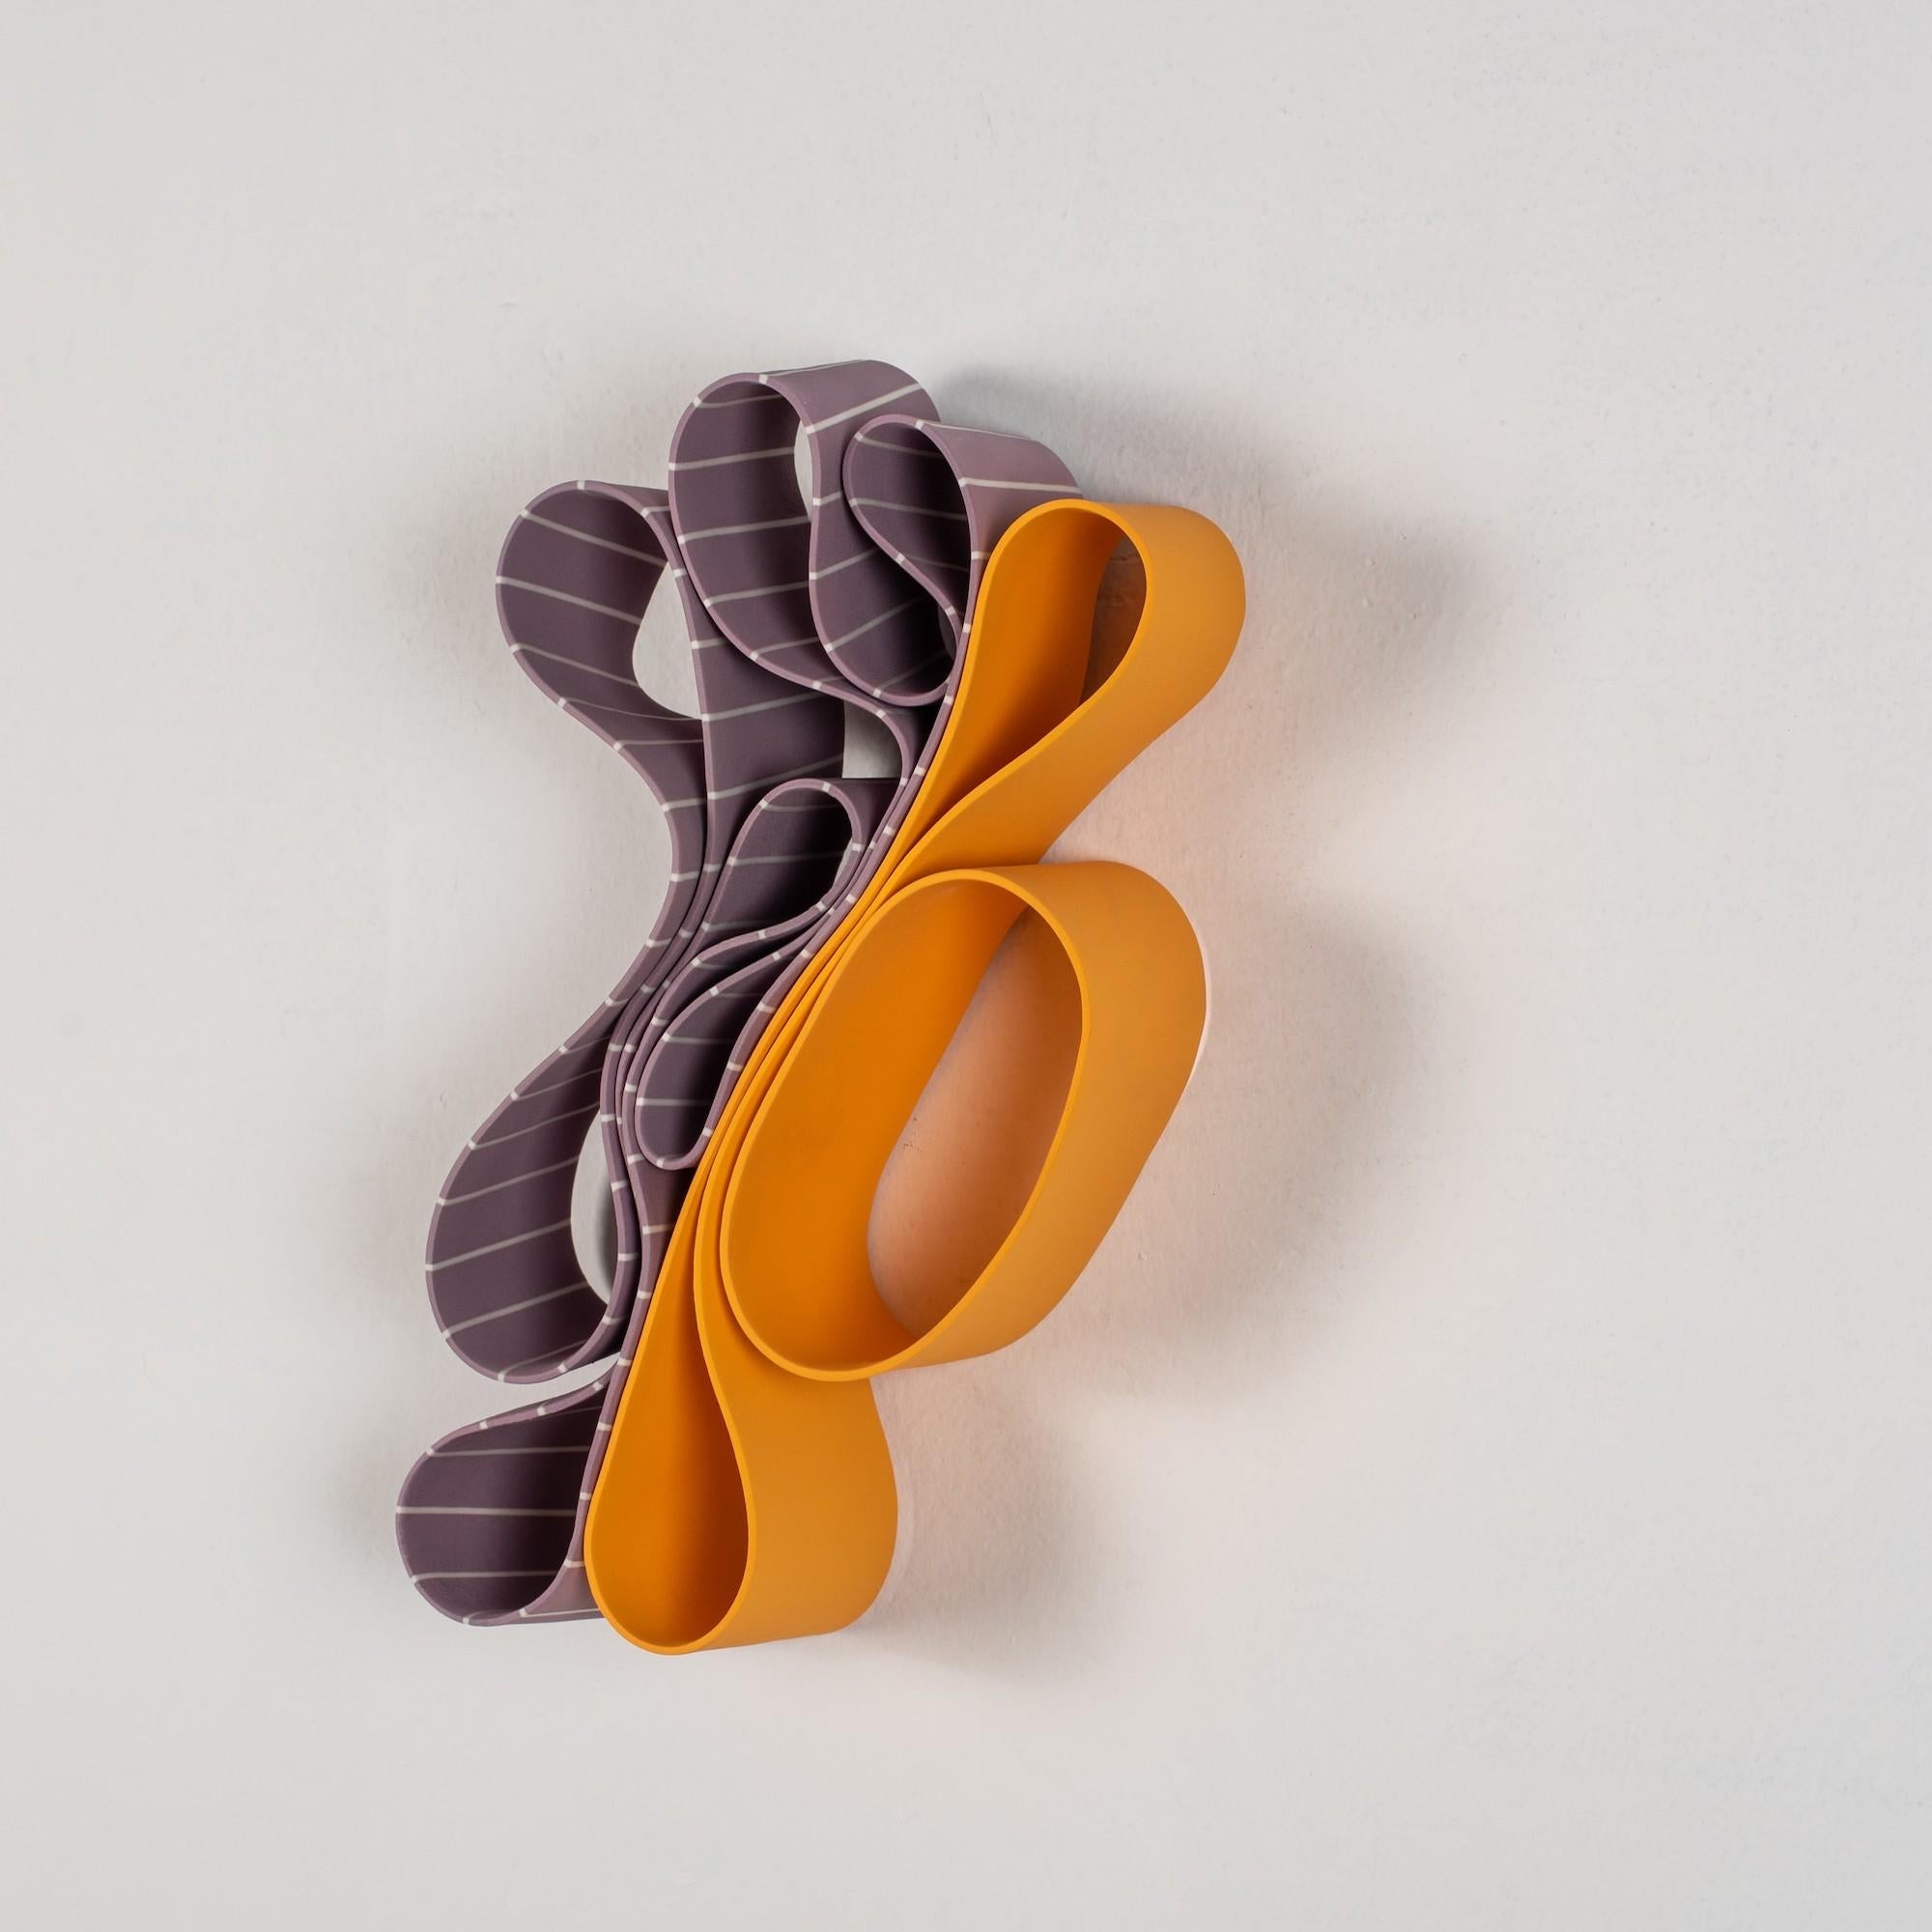 Wall Object #1 by Simcha Even-Chen - Porcelain sculpture, orange, violet, lines For Sale 2